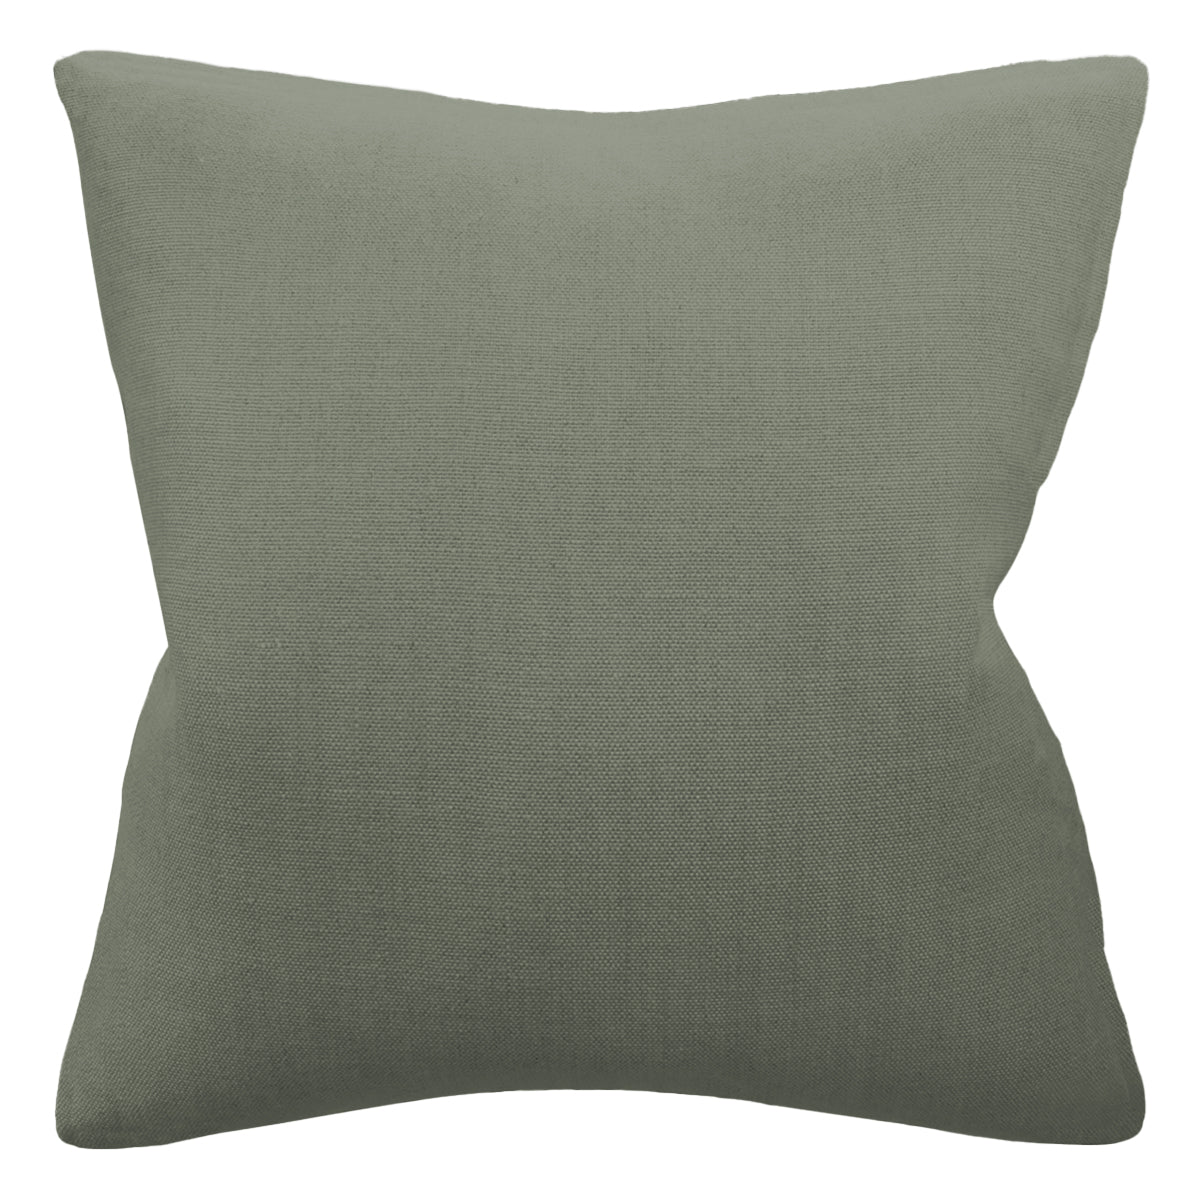 Ryan Studio Slubby Linen Piped Decorative Pillow